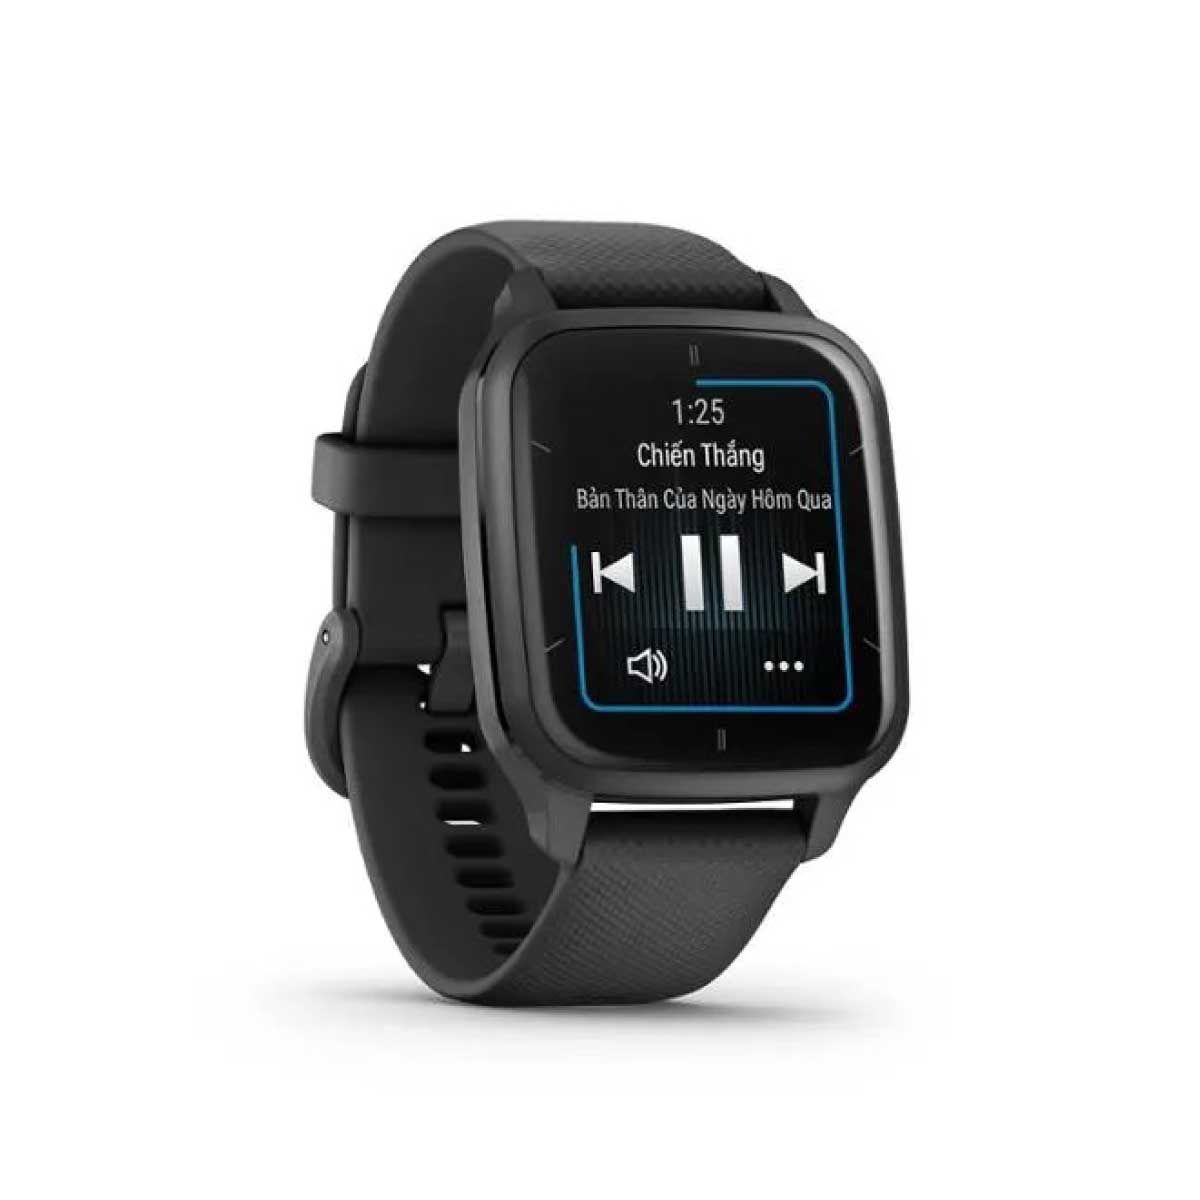 GARMIN Smart Watch  รุ่น Venu Sq 2 Music